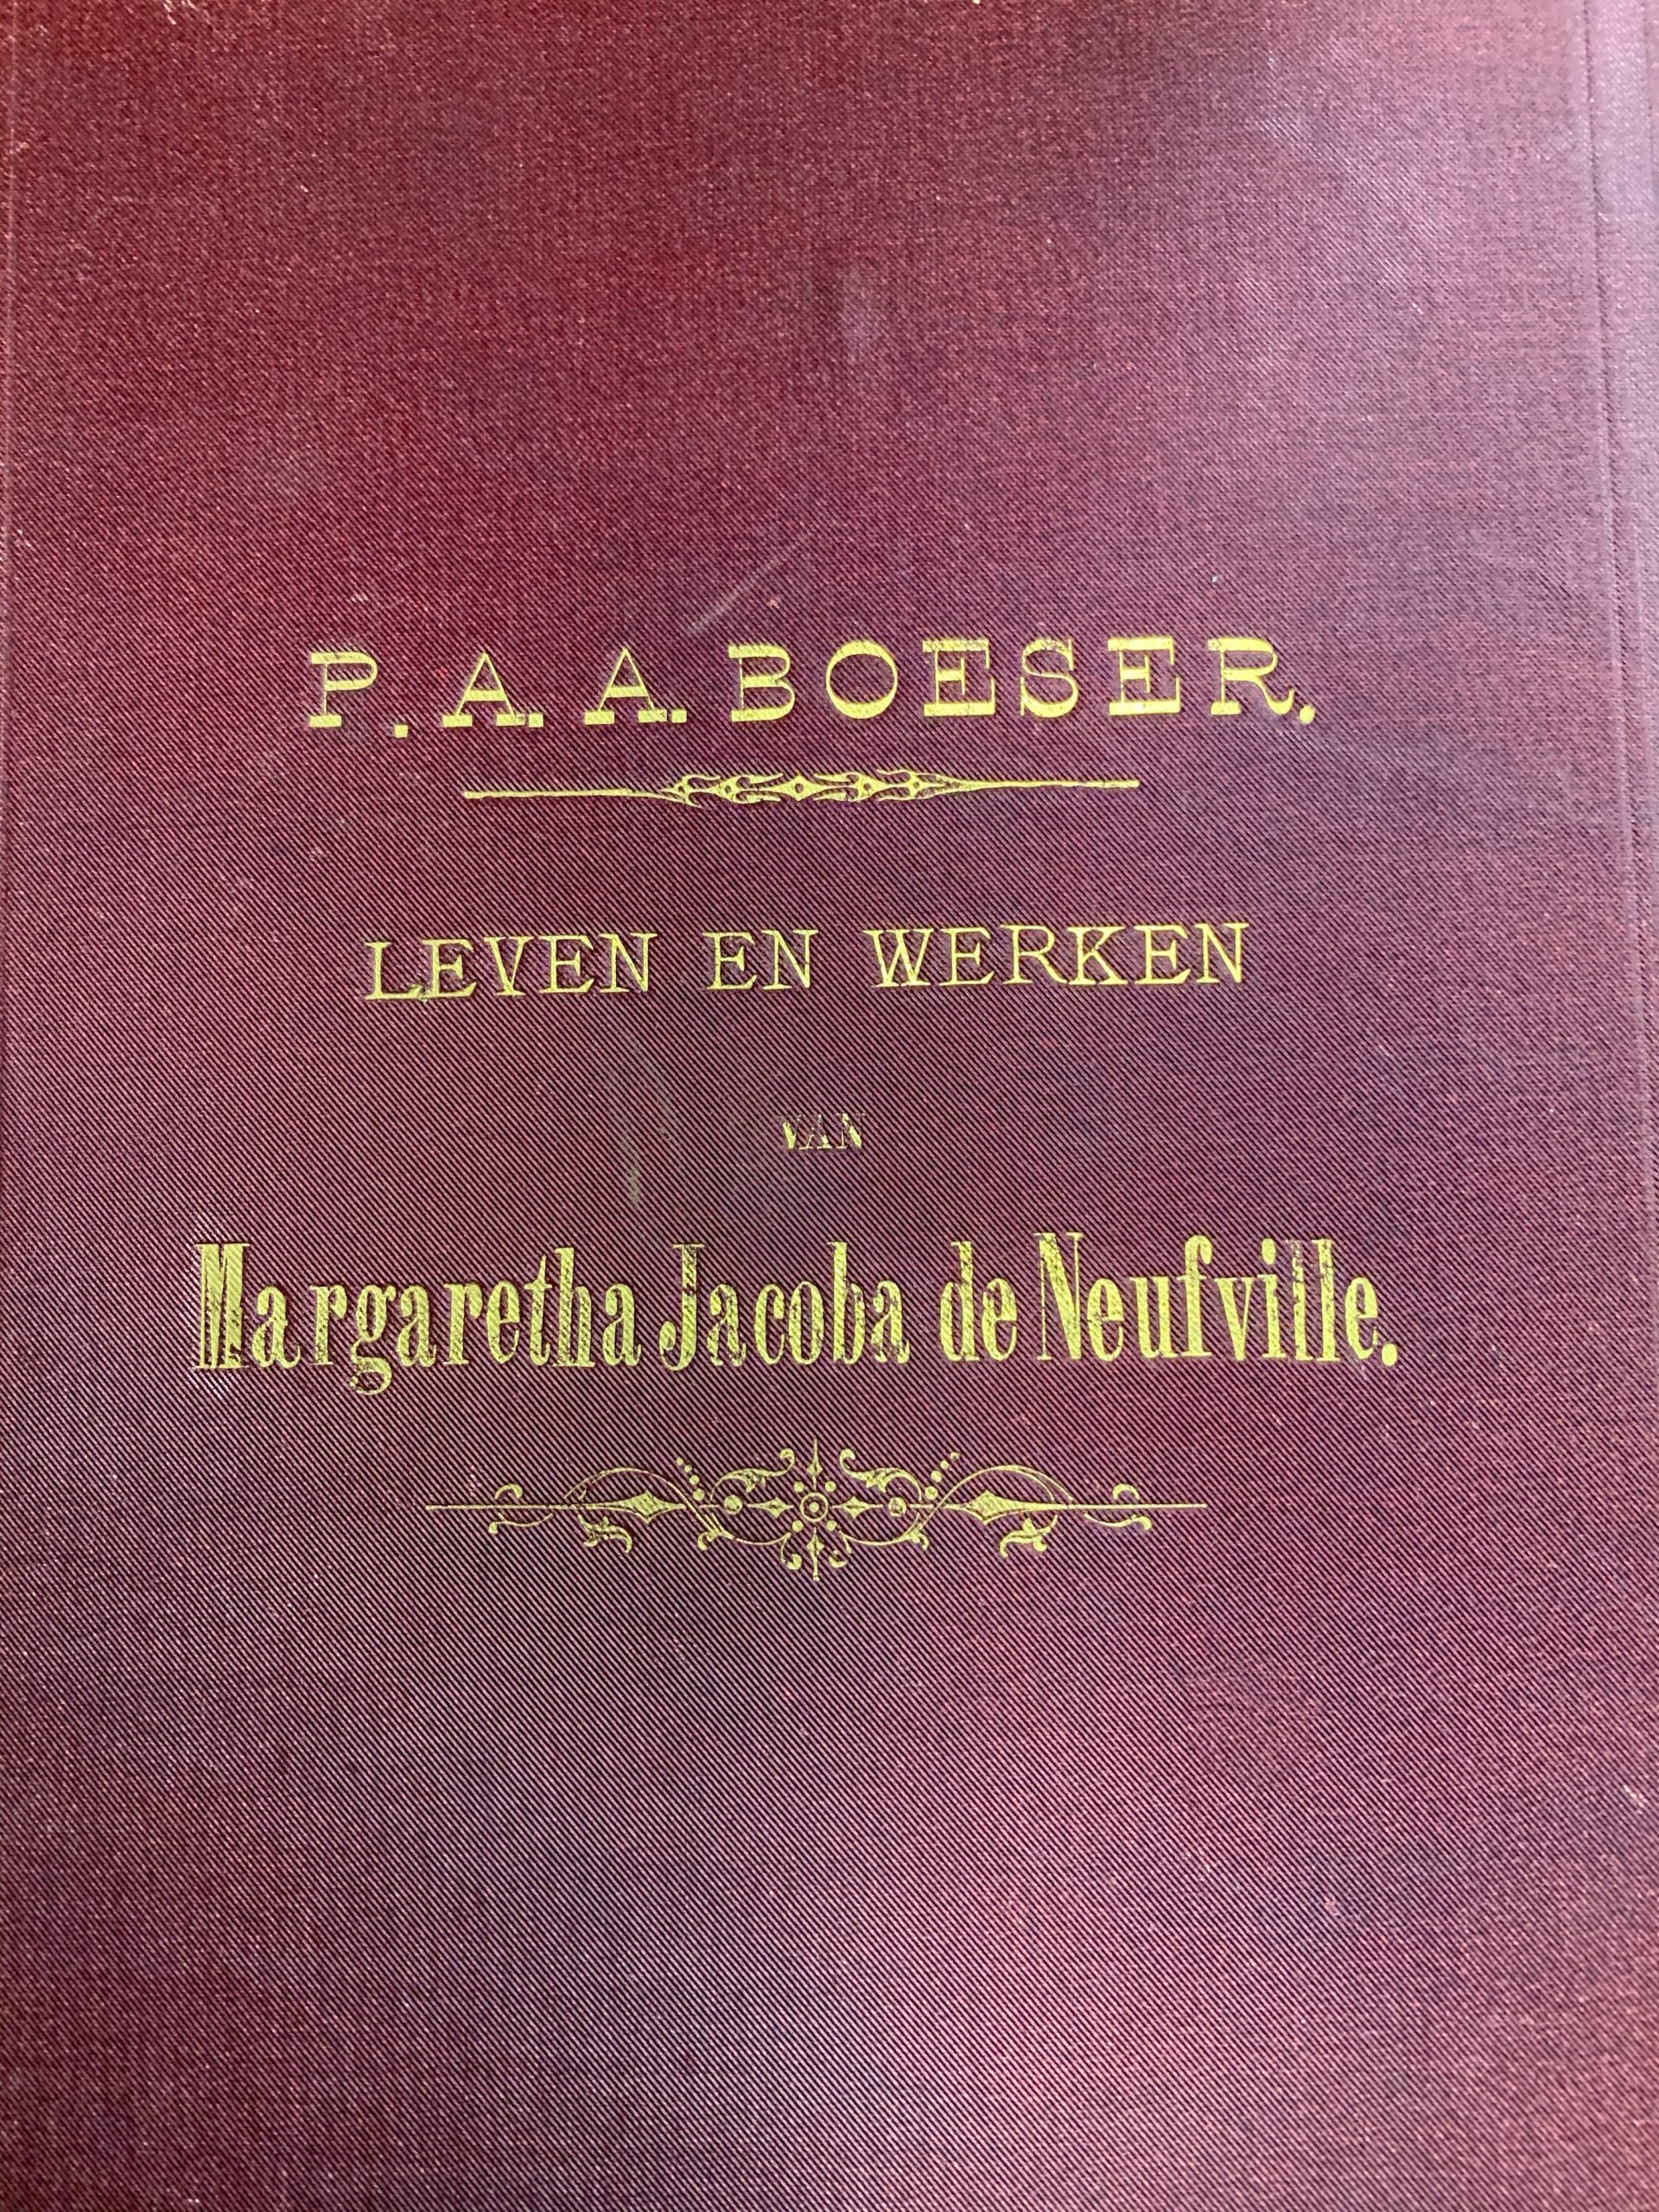 BOESER, P. A. A., Leven en werken van Margaretha Jacoba de Neufville.